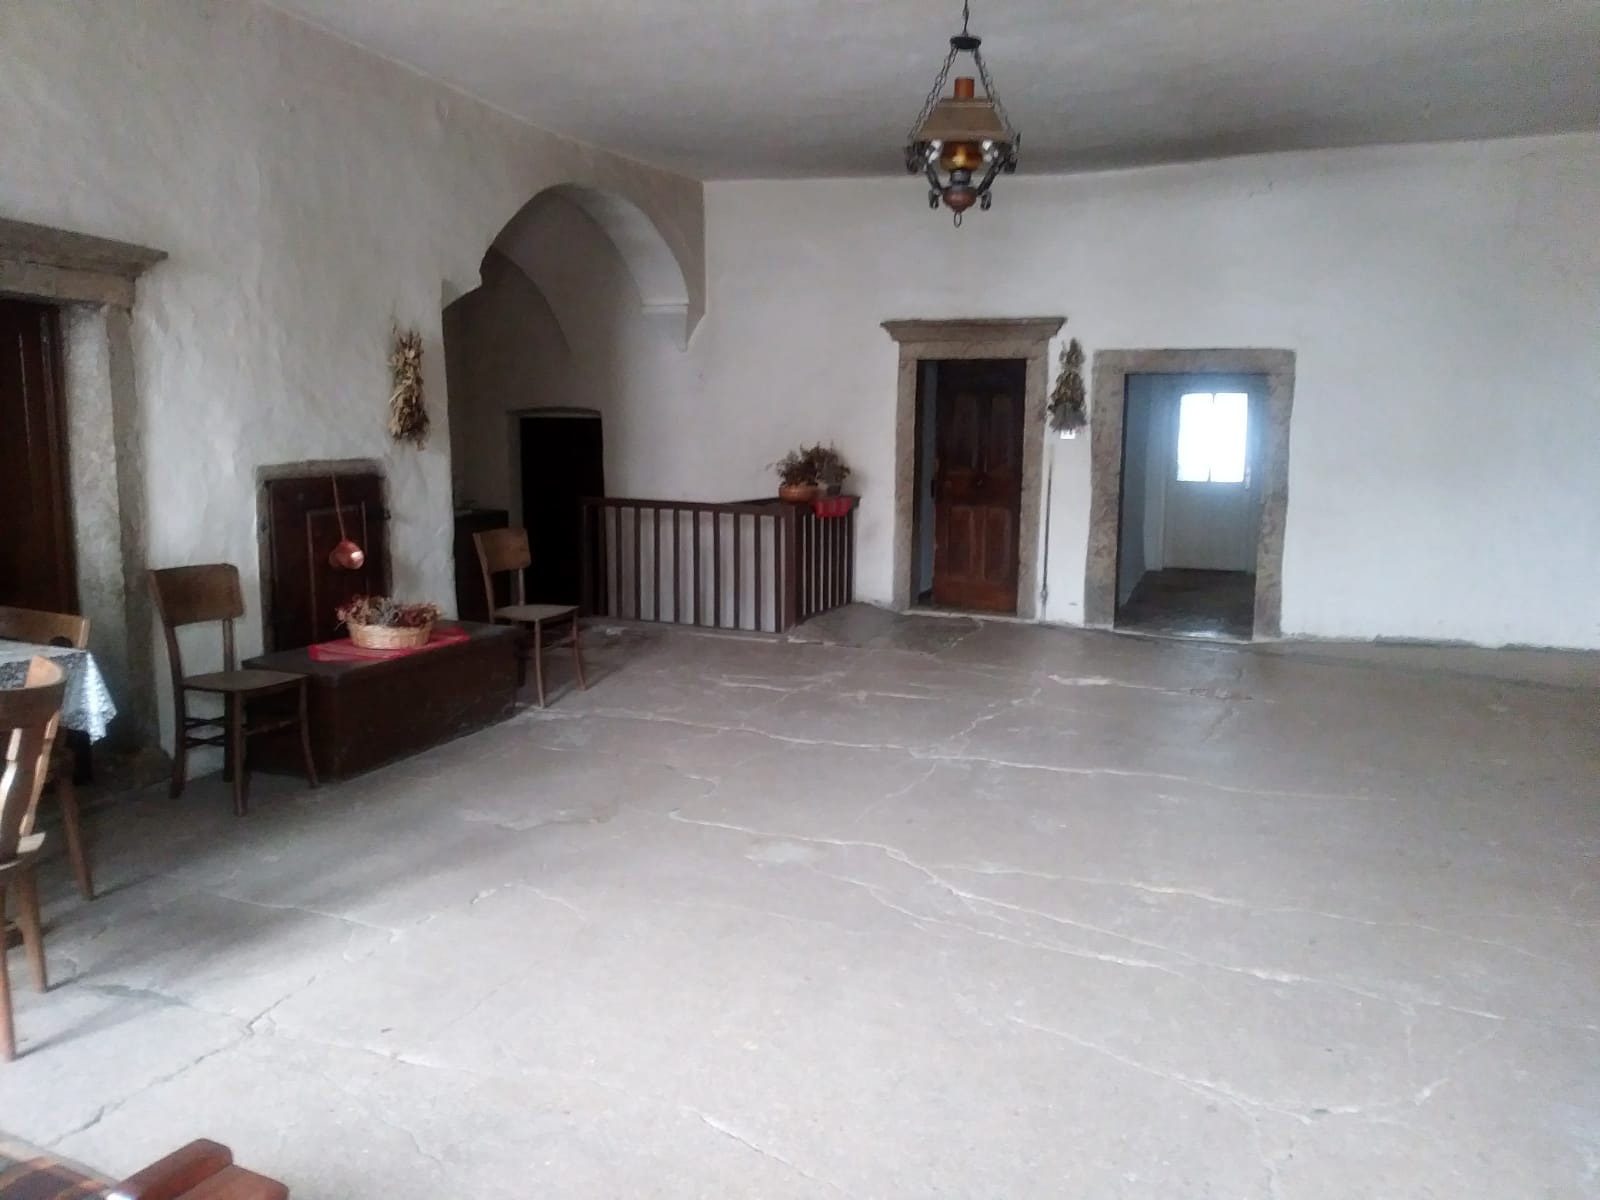 Interior of Casa Ziller (now Casa Giuliani) in Sanzeno, Trentino. Photo courtesy of Elisa Giuliani Pancheri.